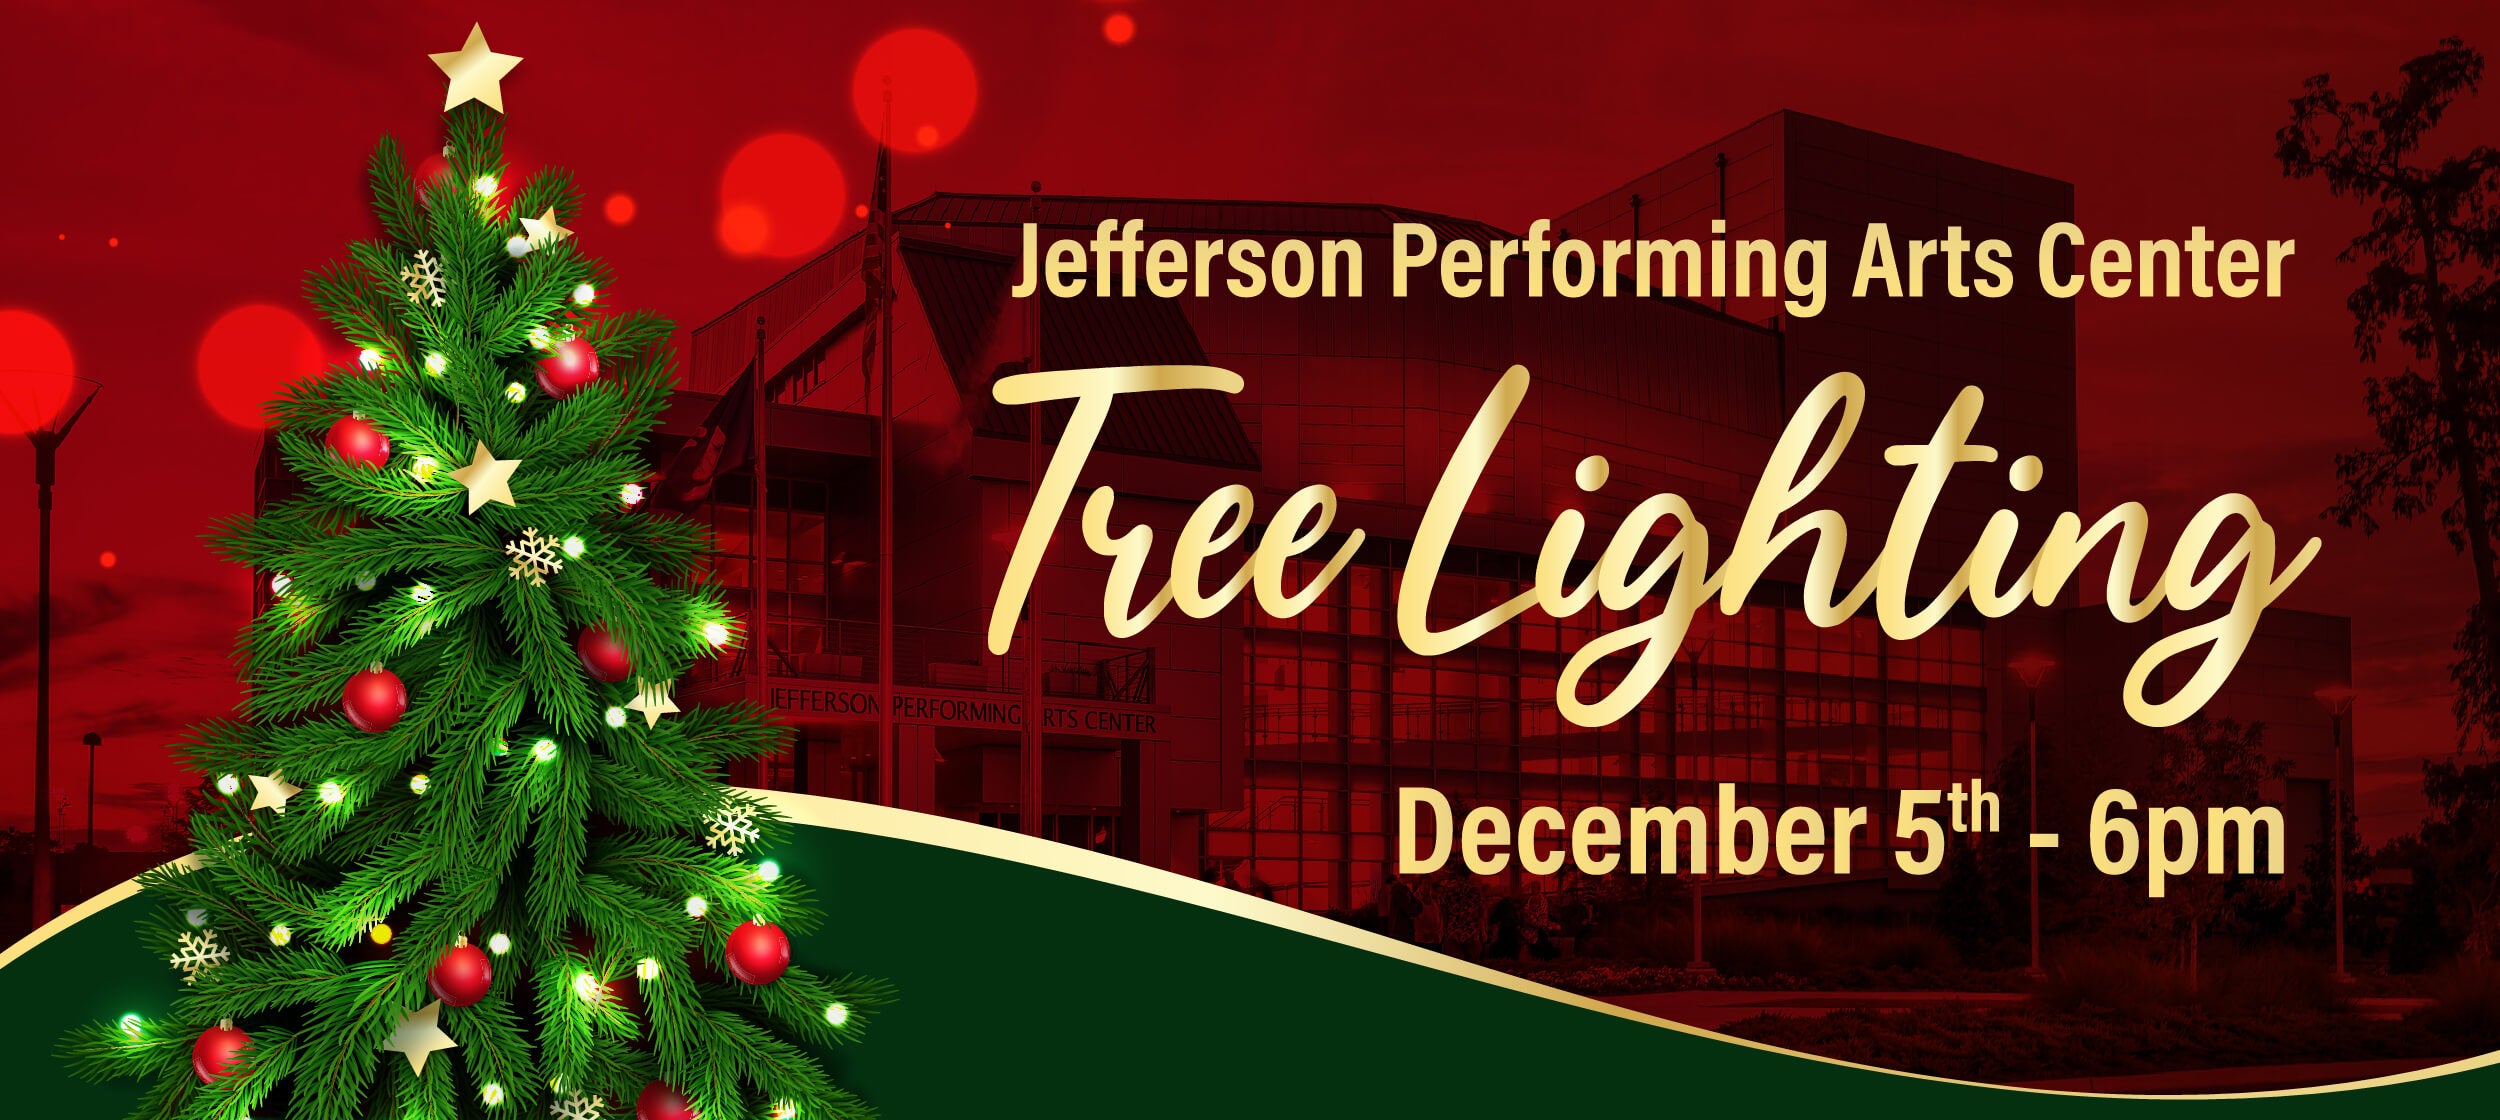 Jefferson Performing Arts Center Tree Lighting